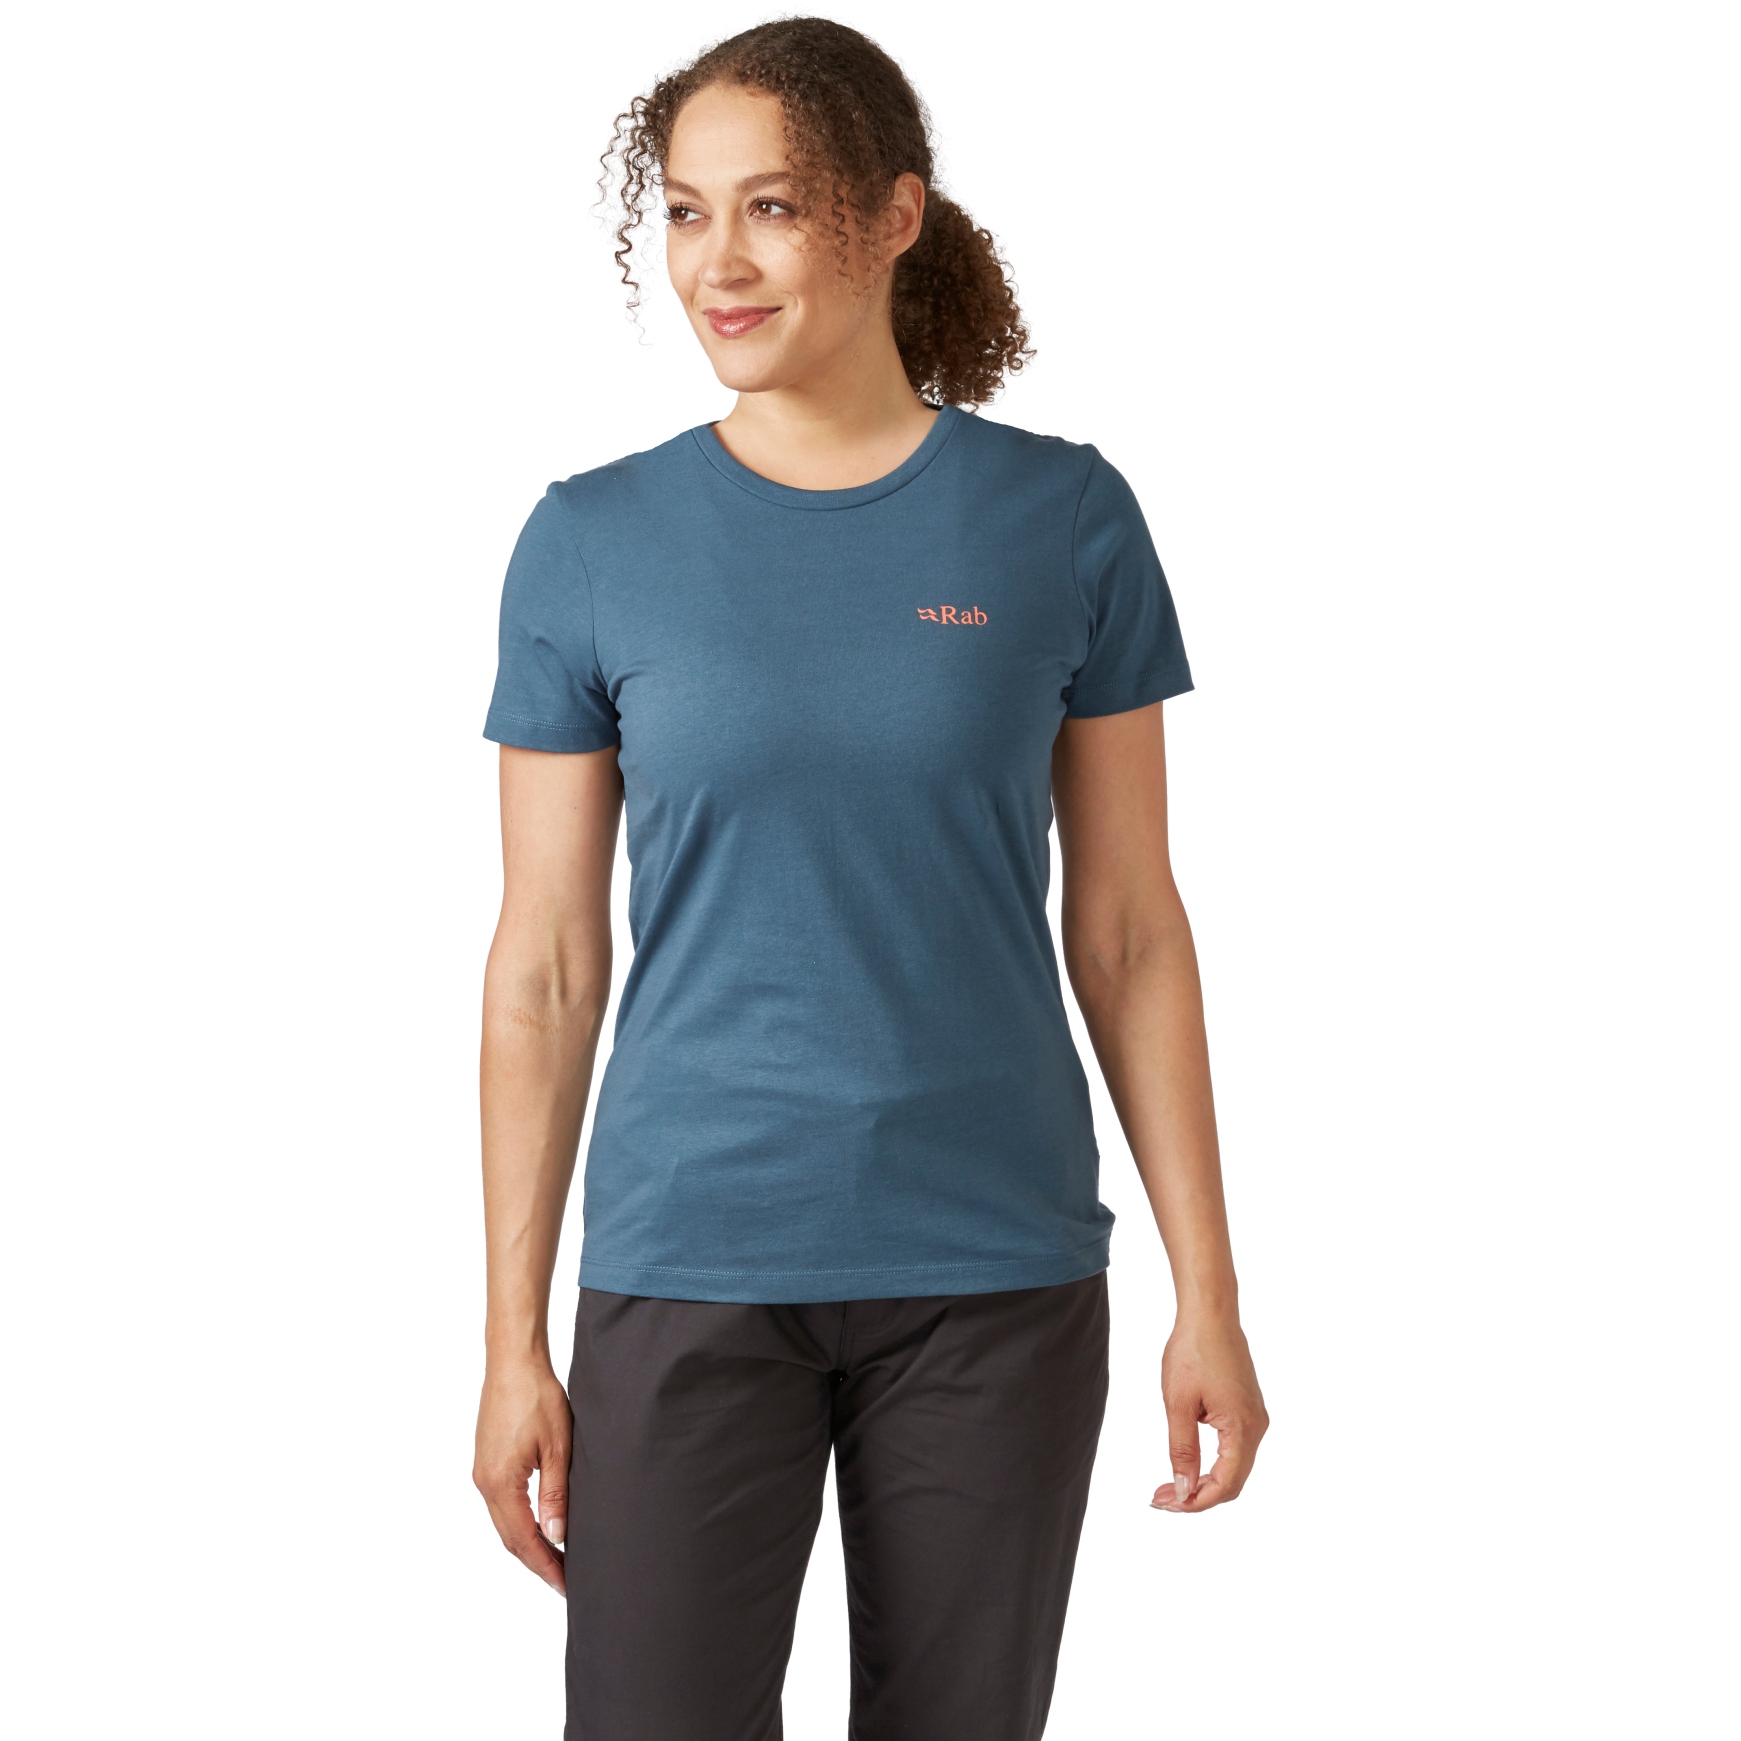 Productfoto van Rab Stance Cinder Dames T-Shirt - orion blue